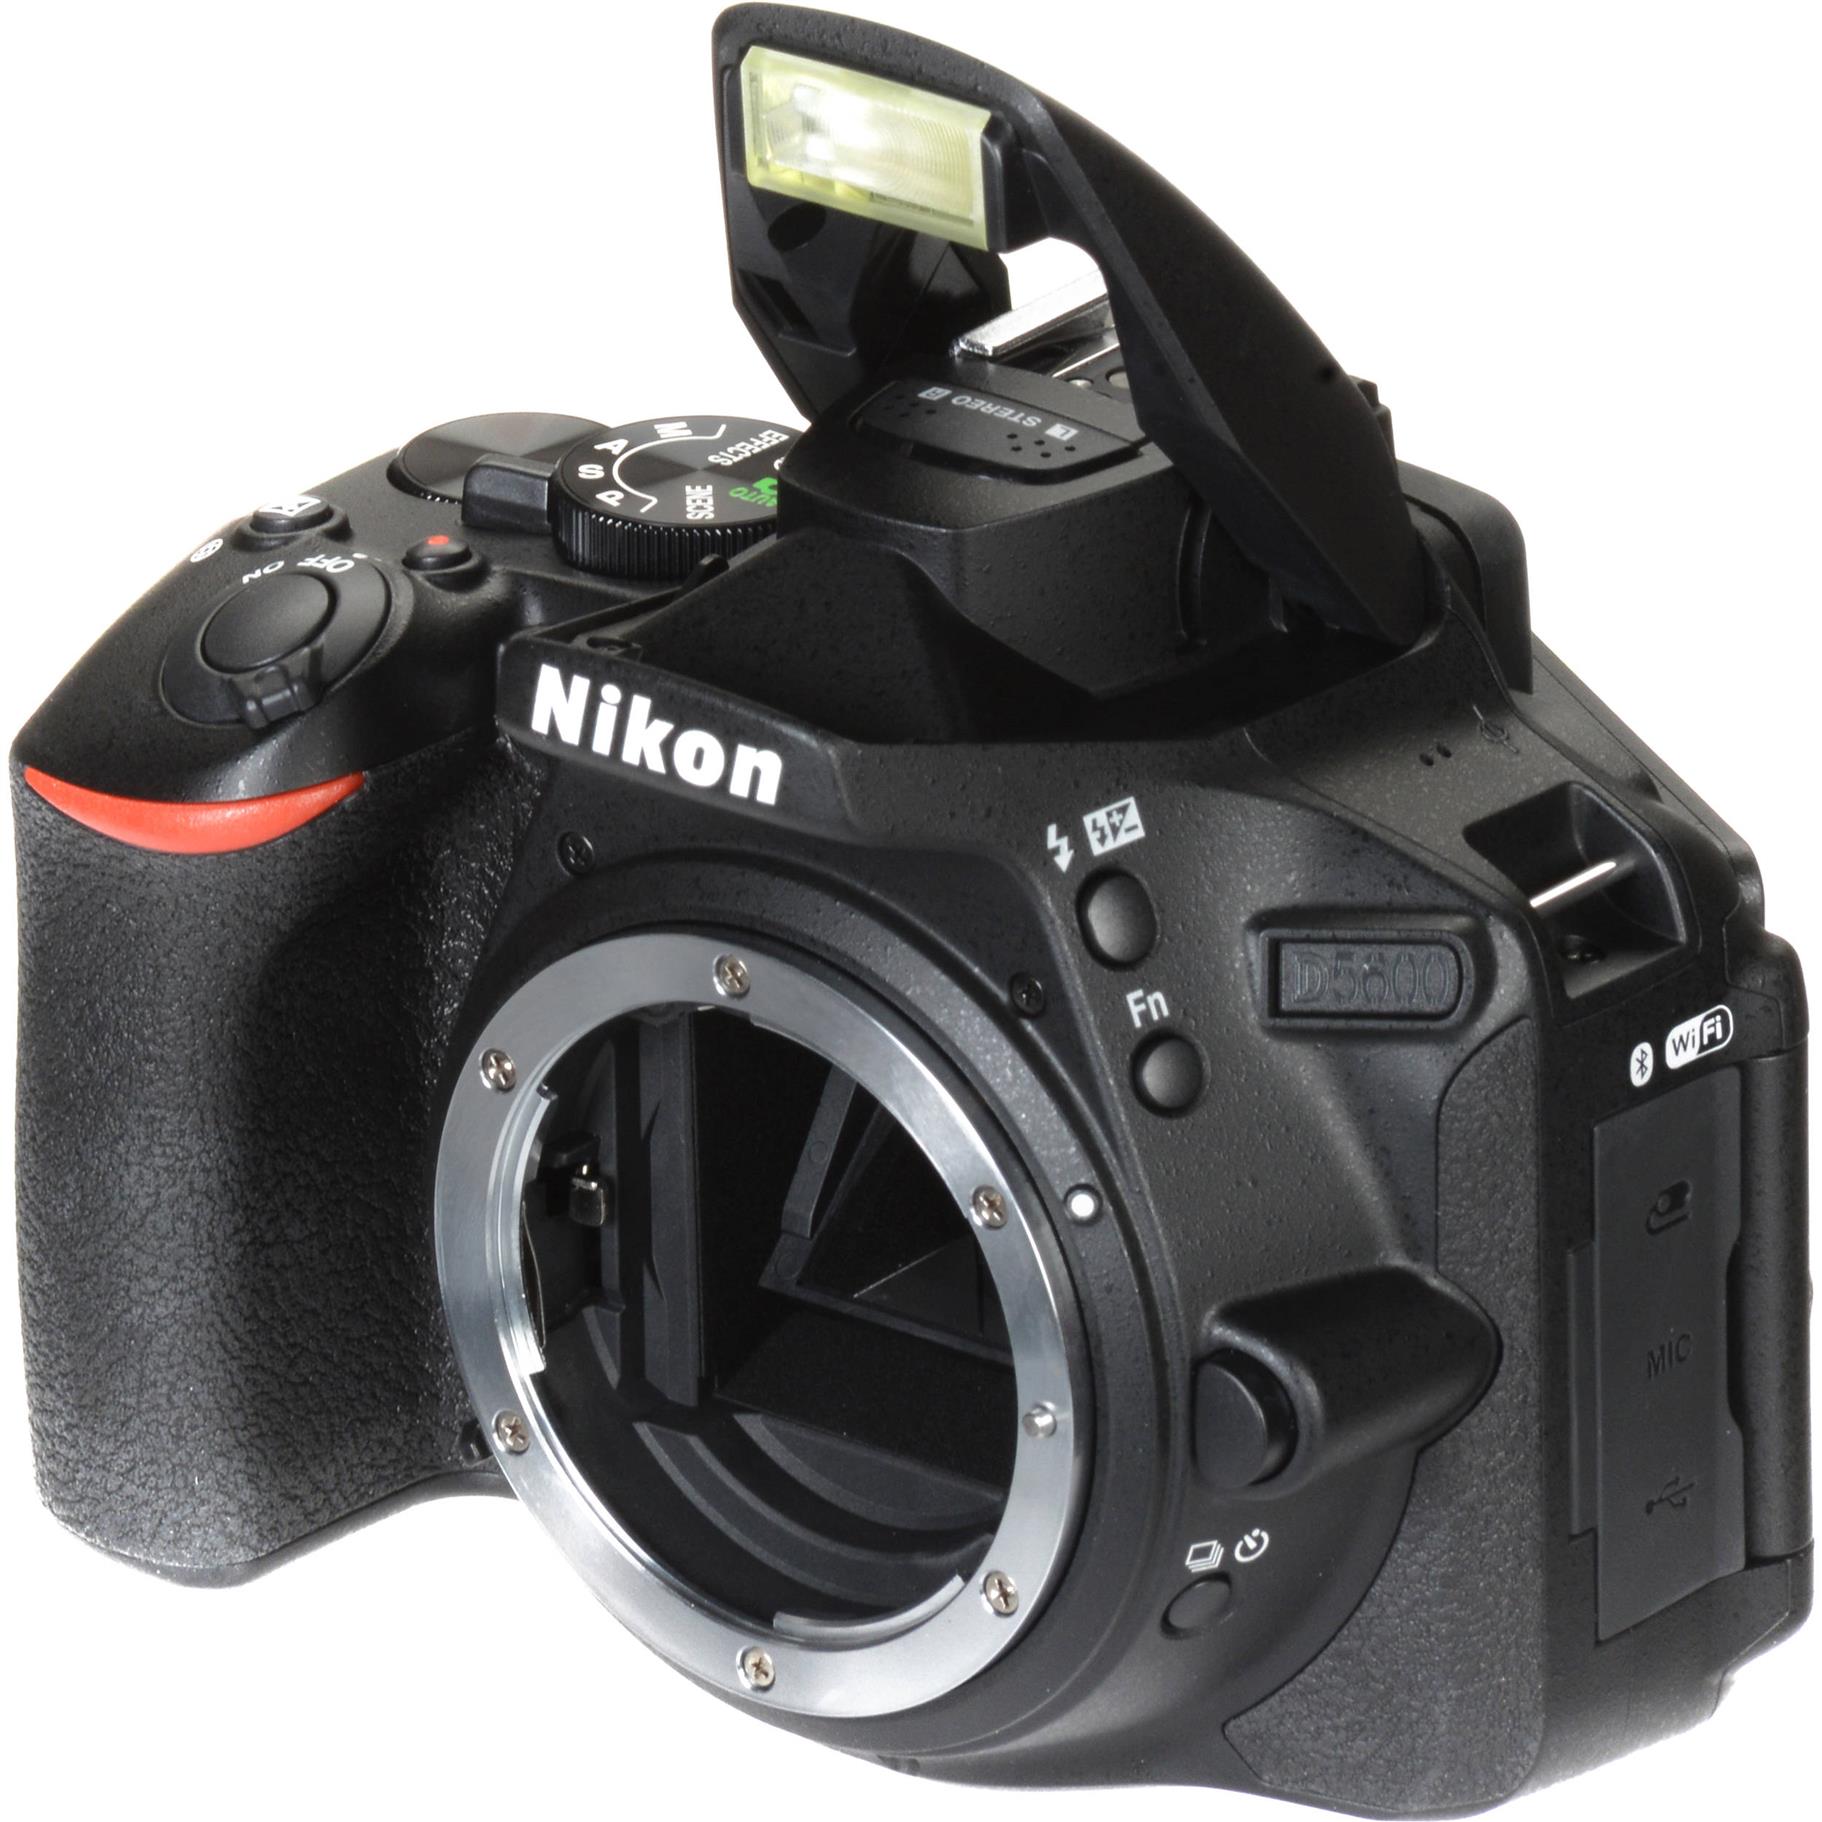 Nikon D5600 24.2 MP DX-format Digital SLR Body Black - image 4 of 9